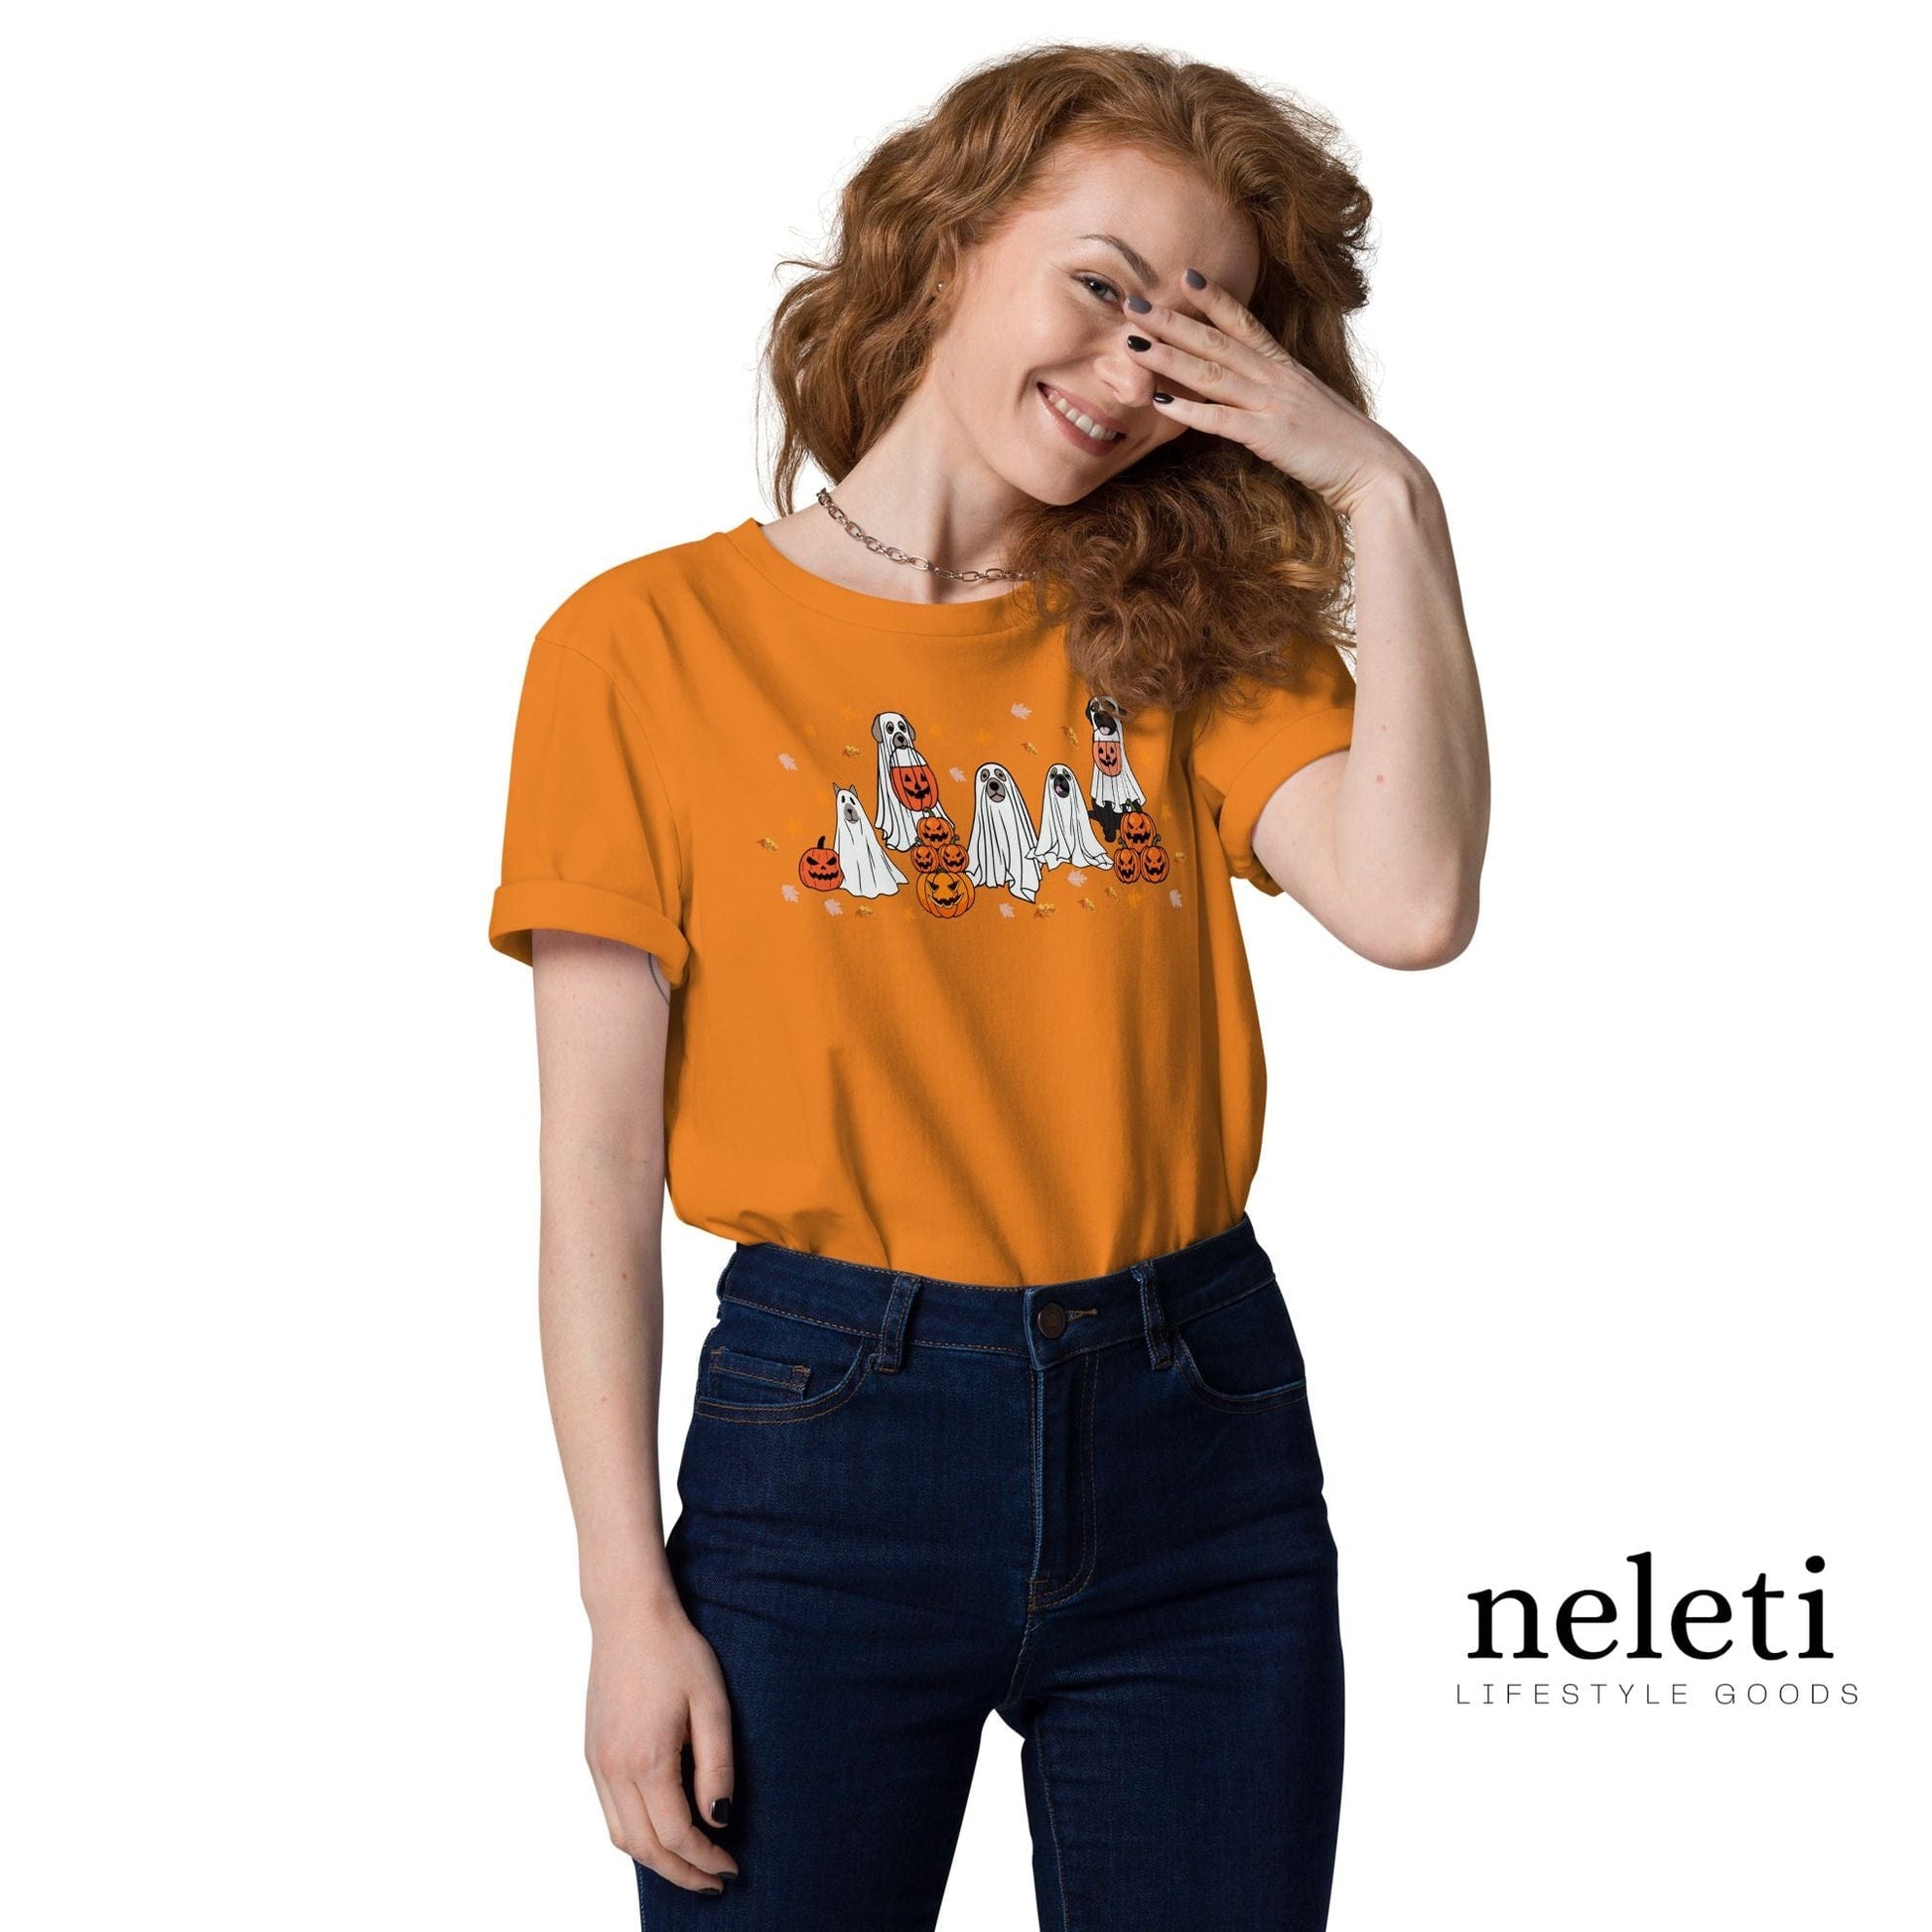 neleti.com-haloween-orange-shirt-for-dog-lovers